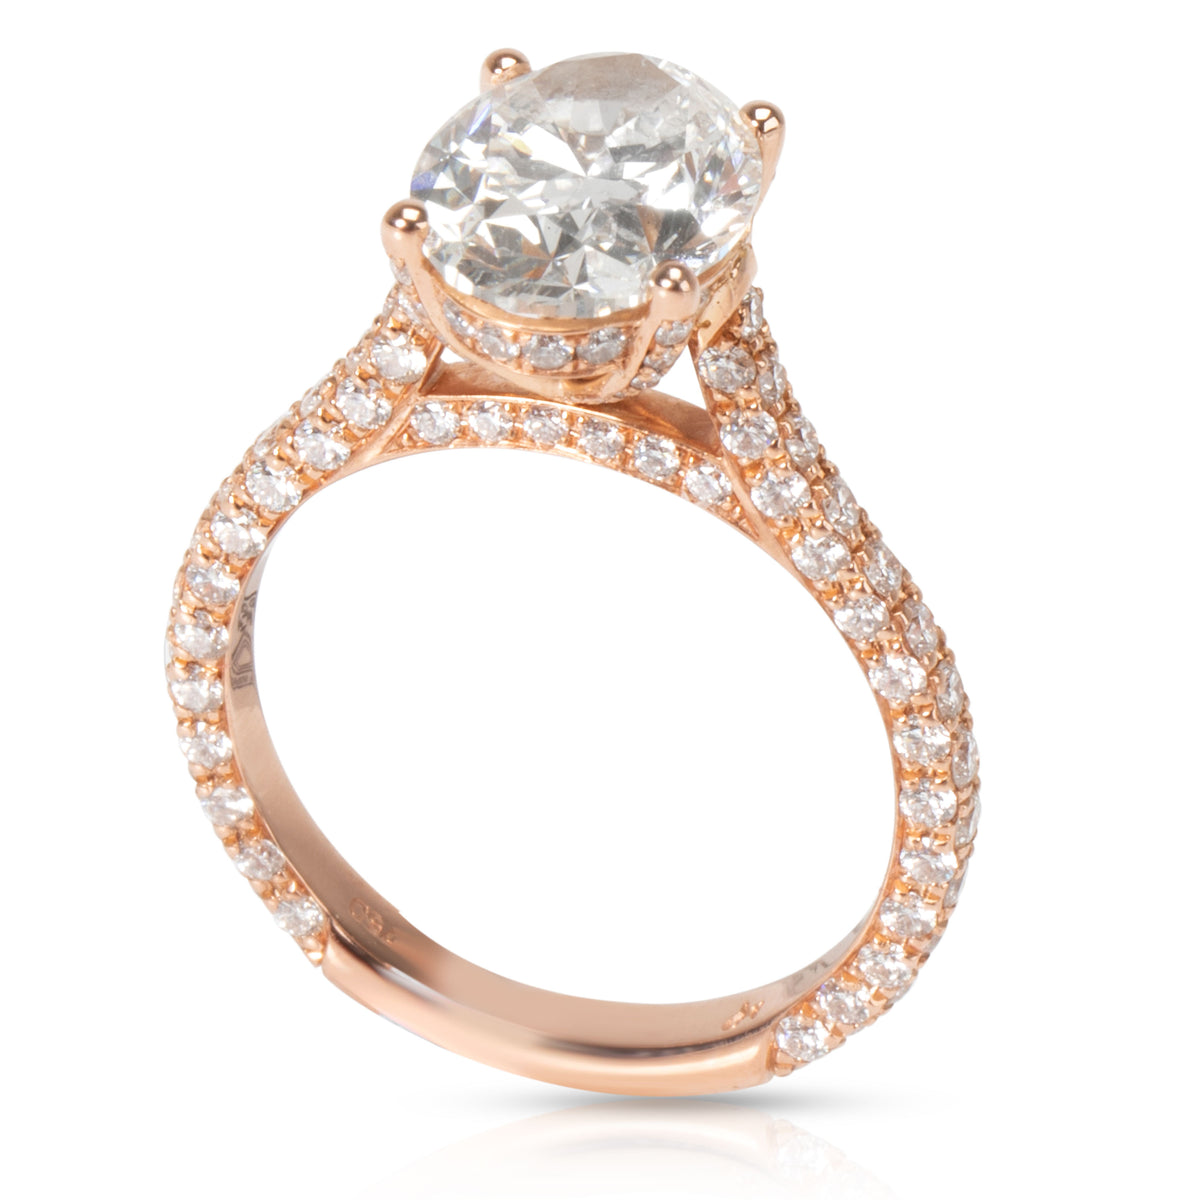 IGI Certified Halo Diamond Engagement Ring in 18K Rose Gold G SI1 2.76 CTW